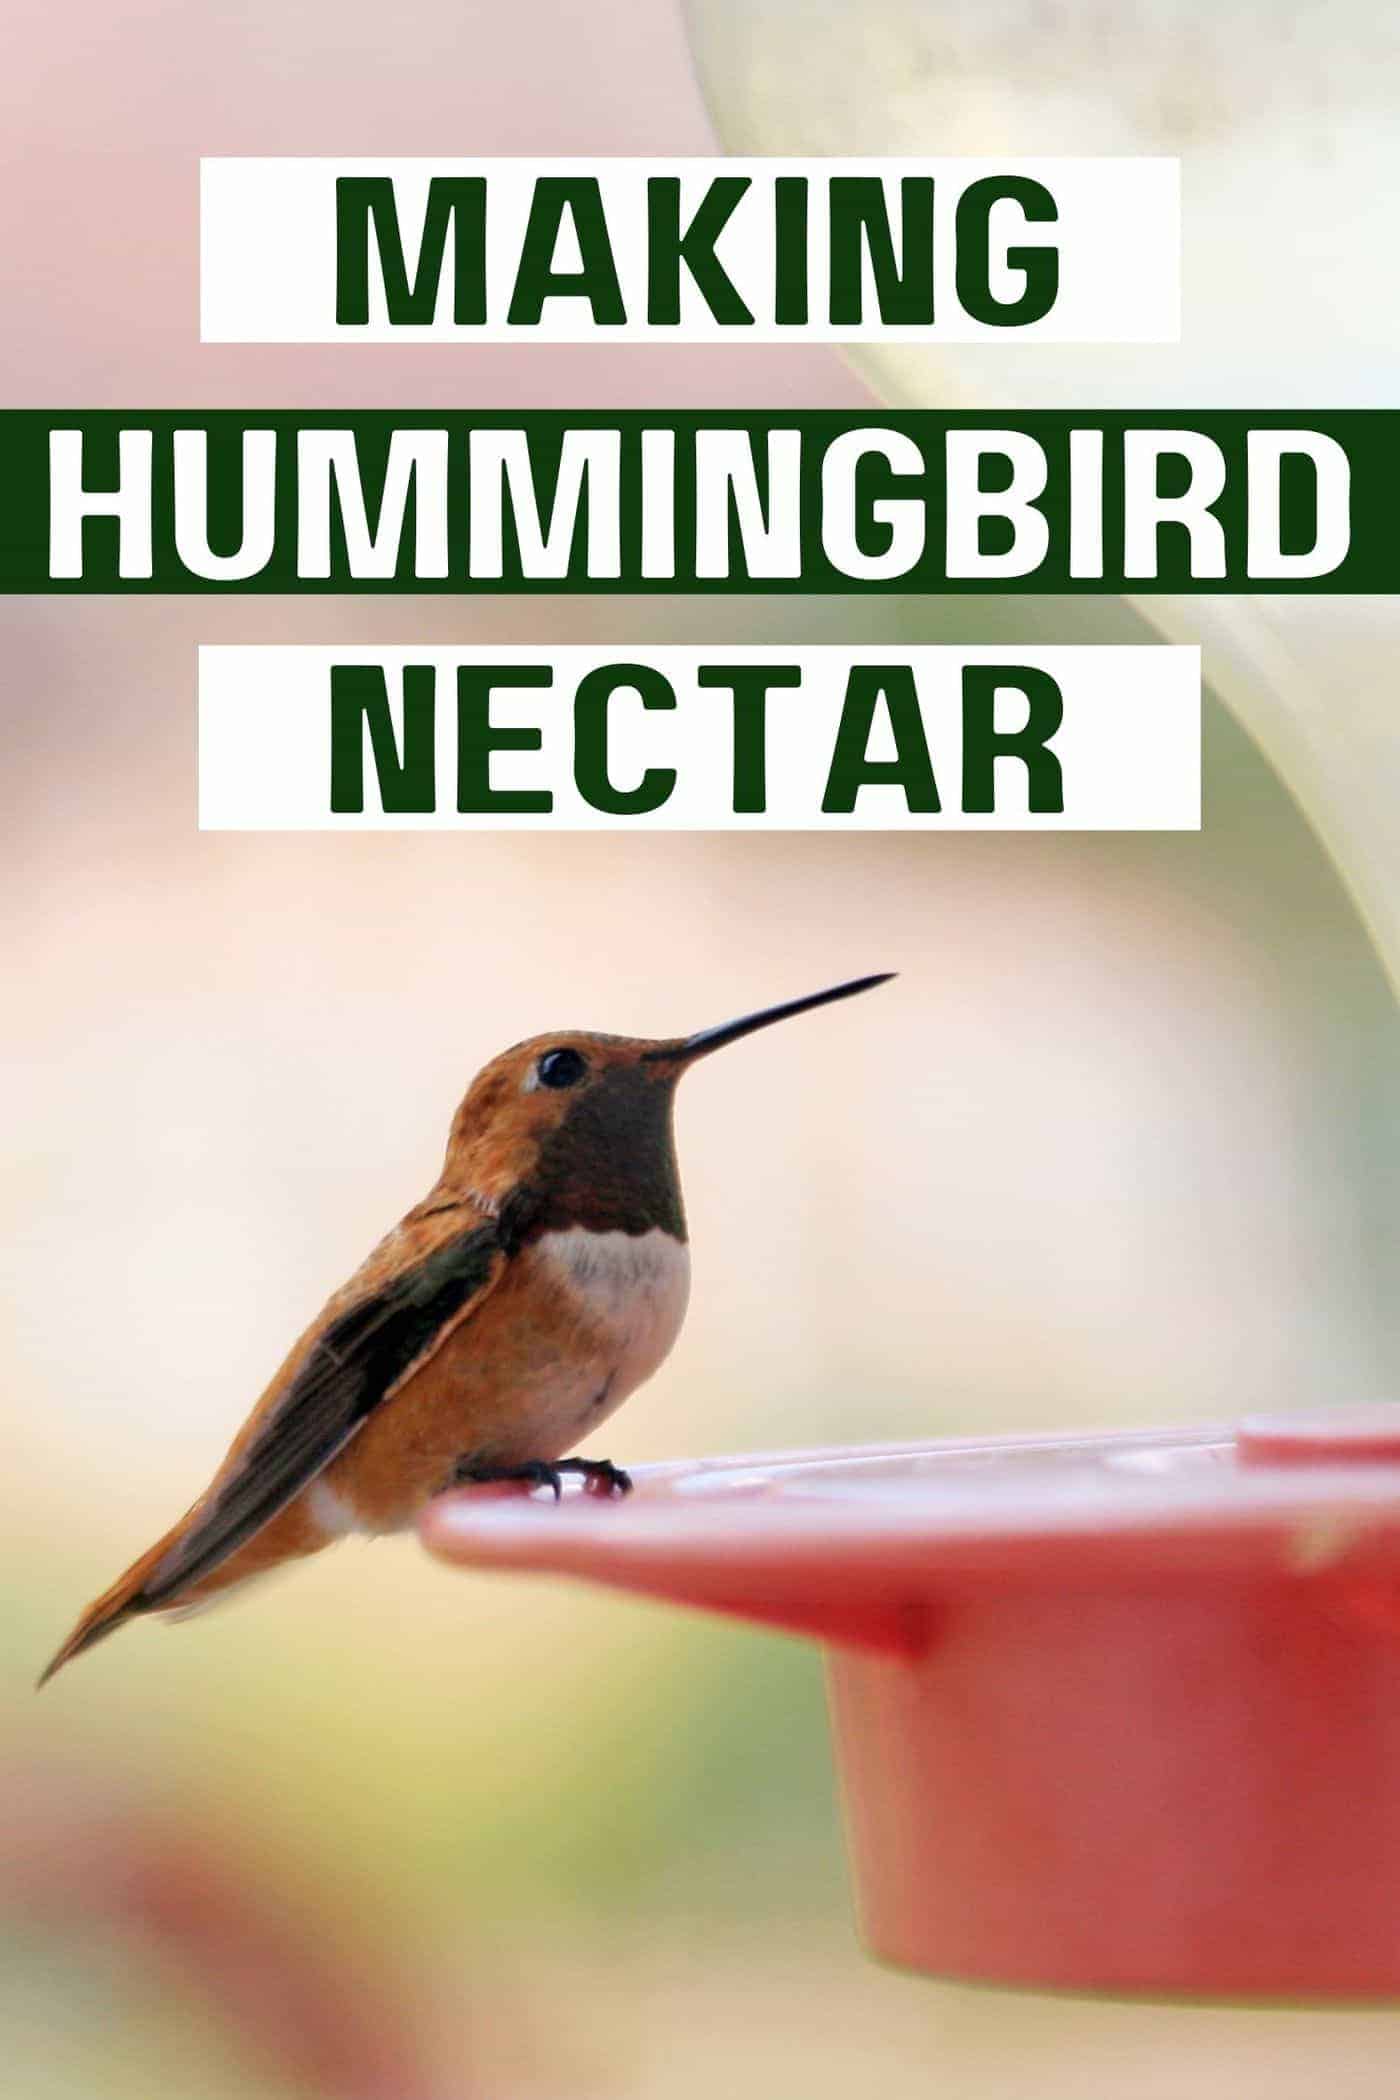 Hummingbird nectar recipe via @home4theharvest